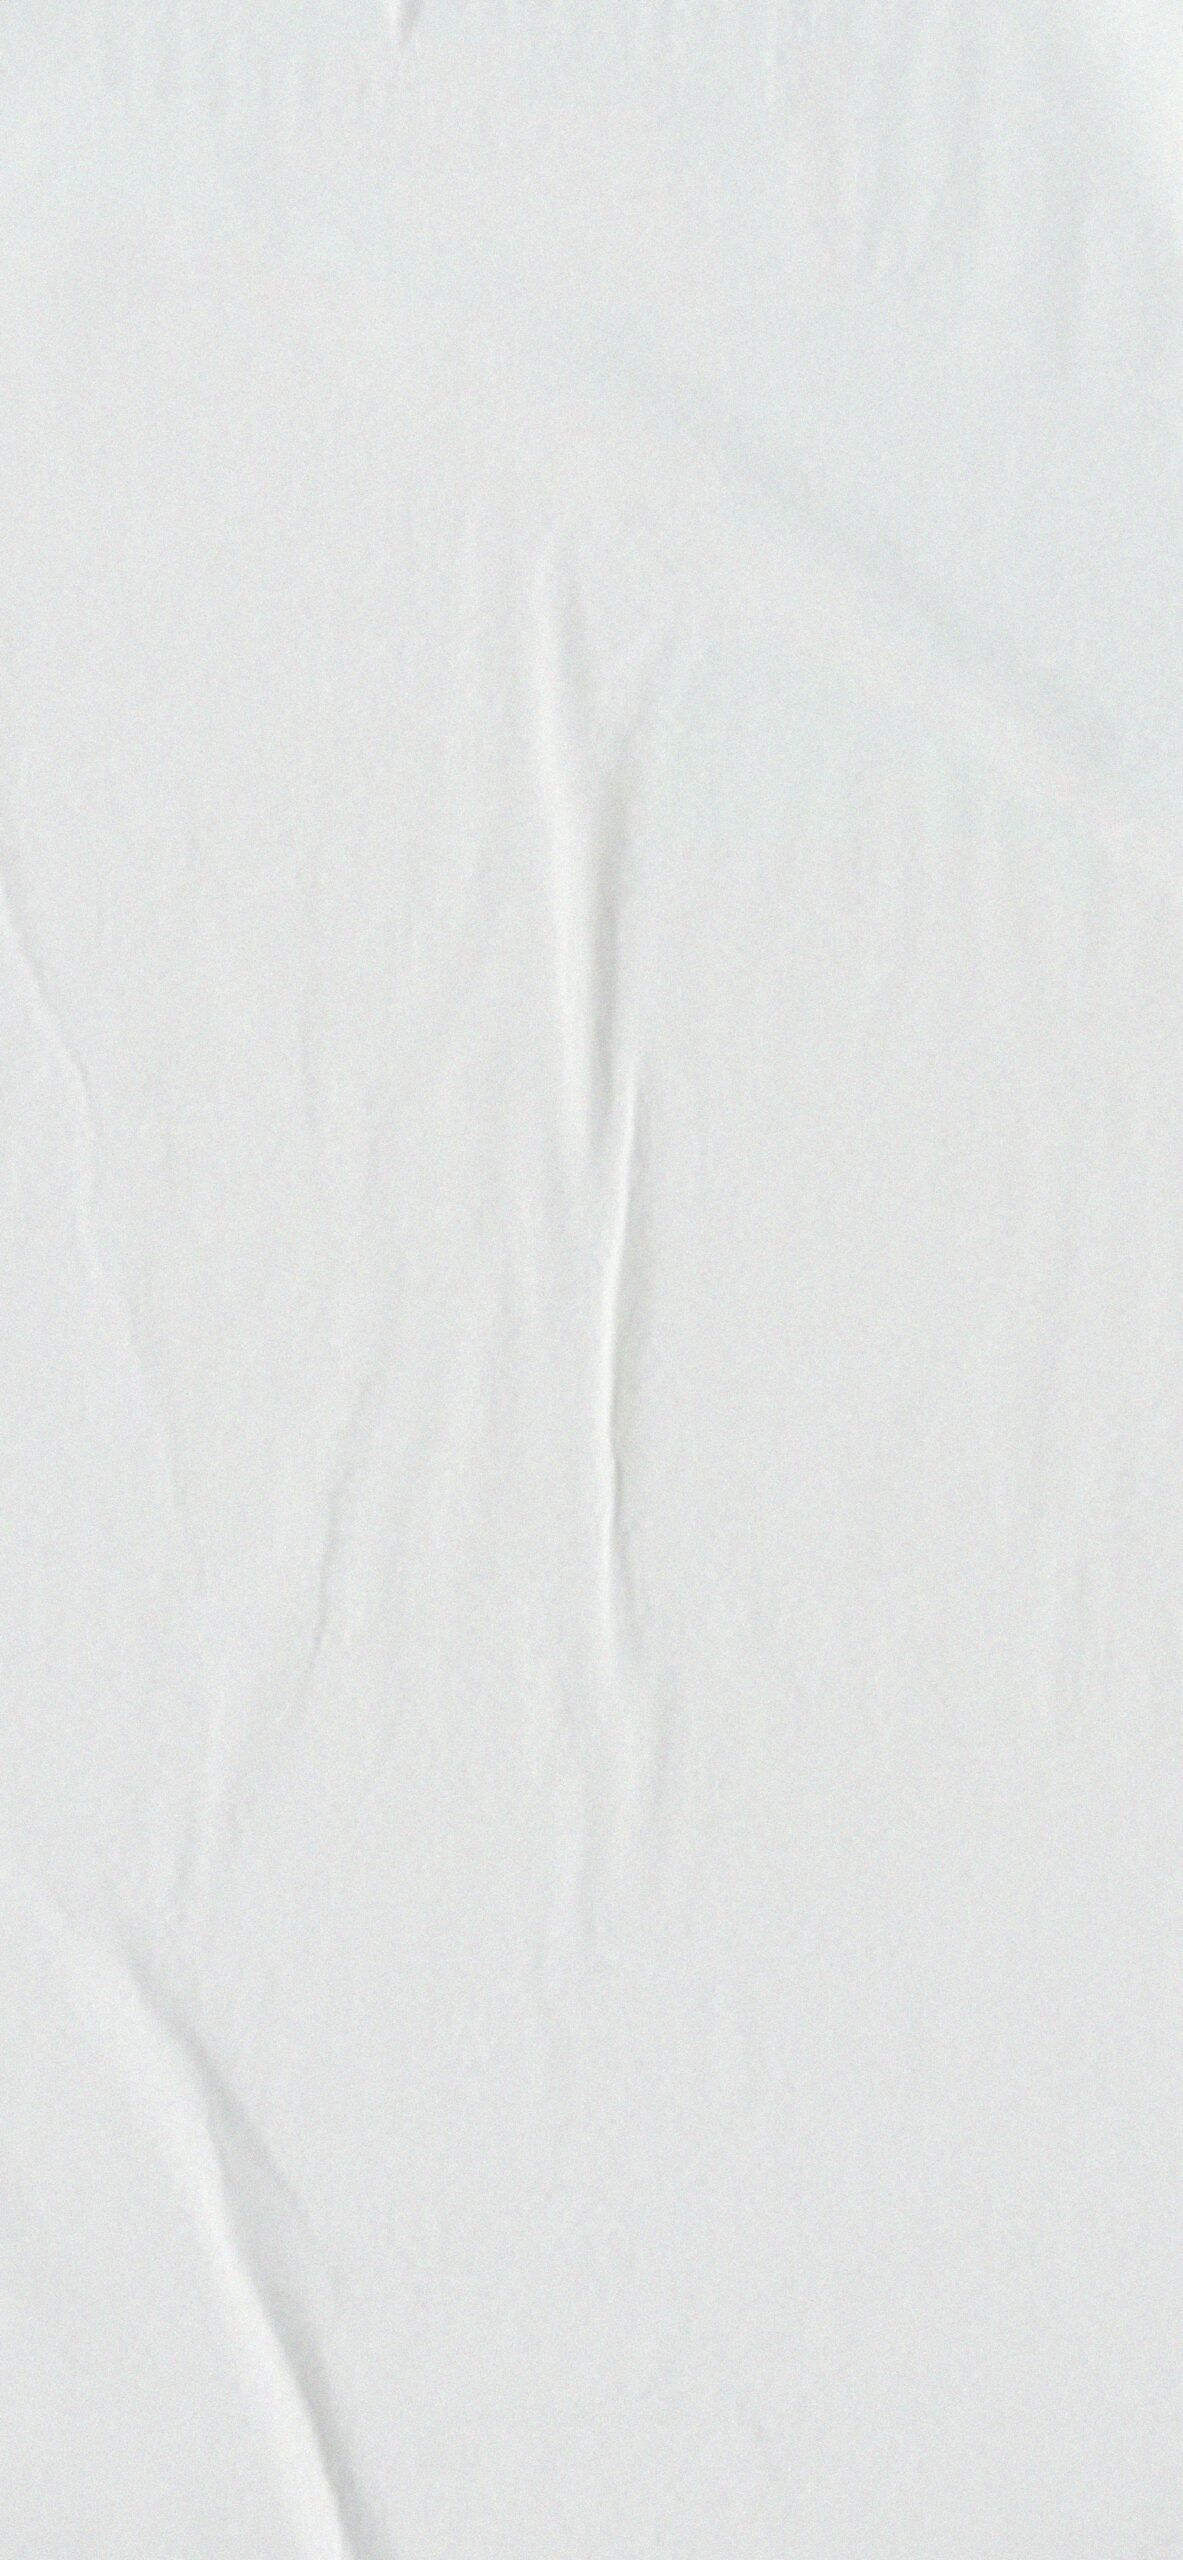 Paper Texture White Aesthetic Wallpaper Wallpaper Phone. Paper texture white, Paper texture, White wallpaper